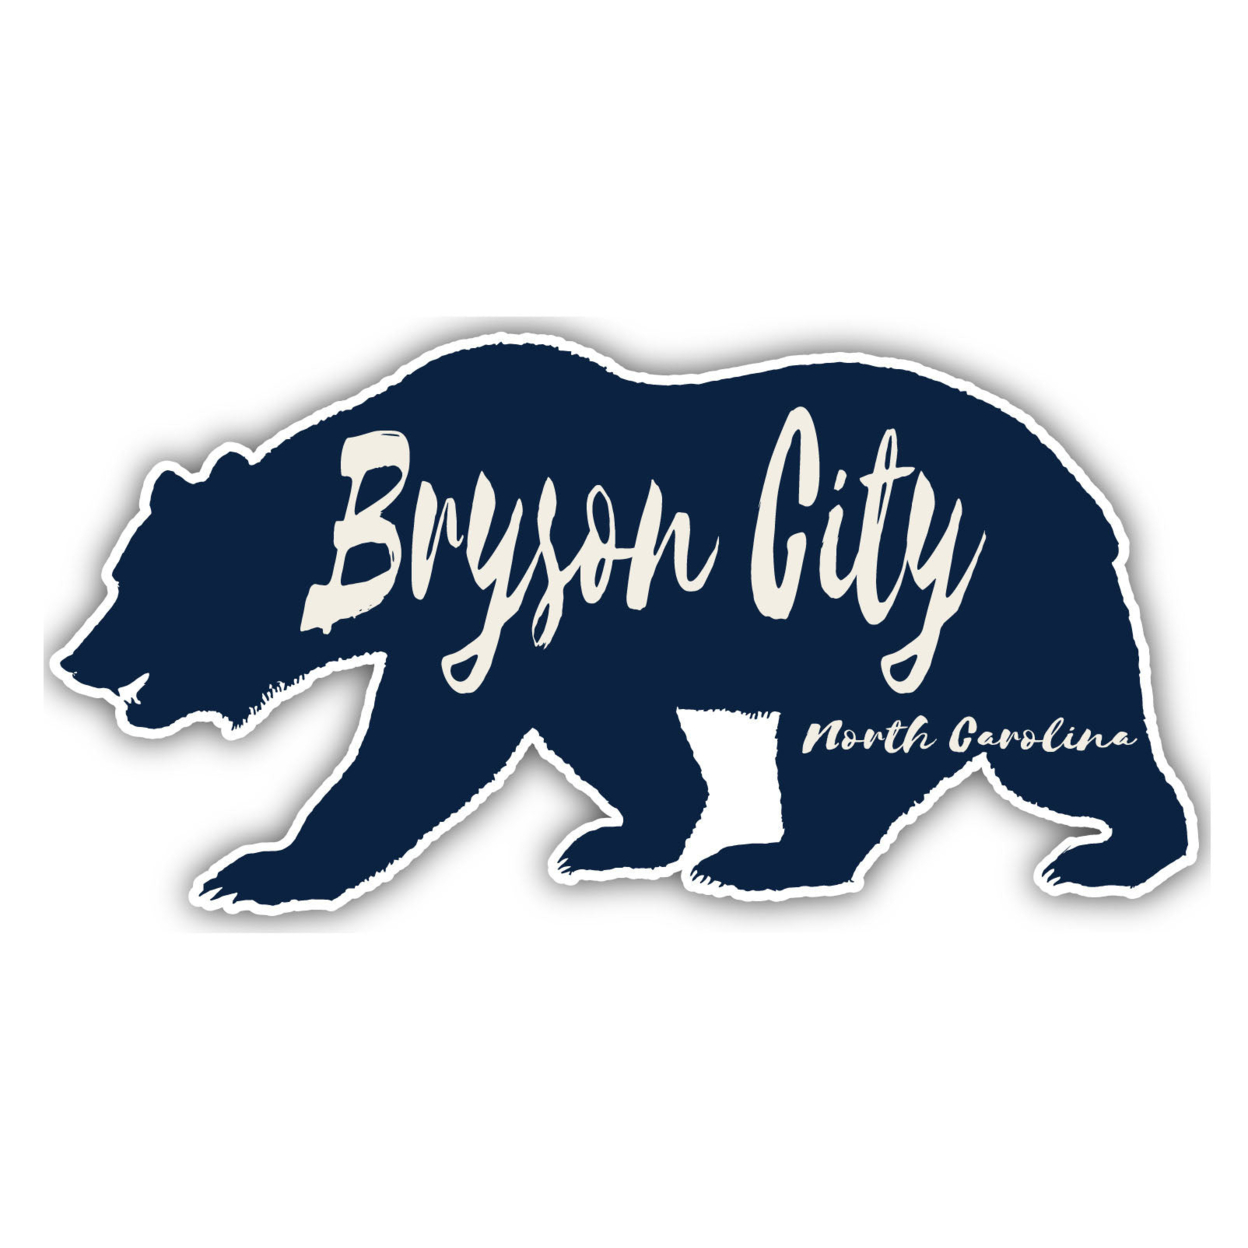 Bryson City North Carolina Souvenir Decorative Stickers (Choose Theme And Size) - Single Unit, 2-Inch, Bear